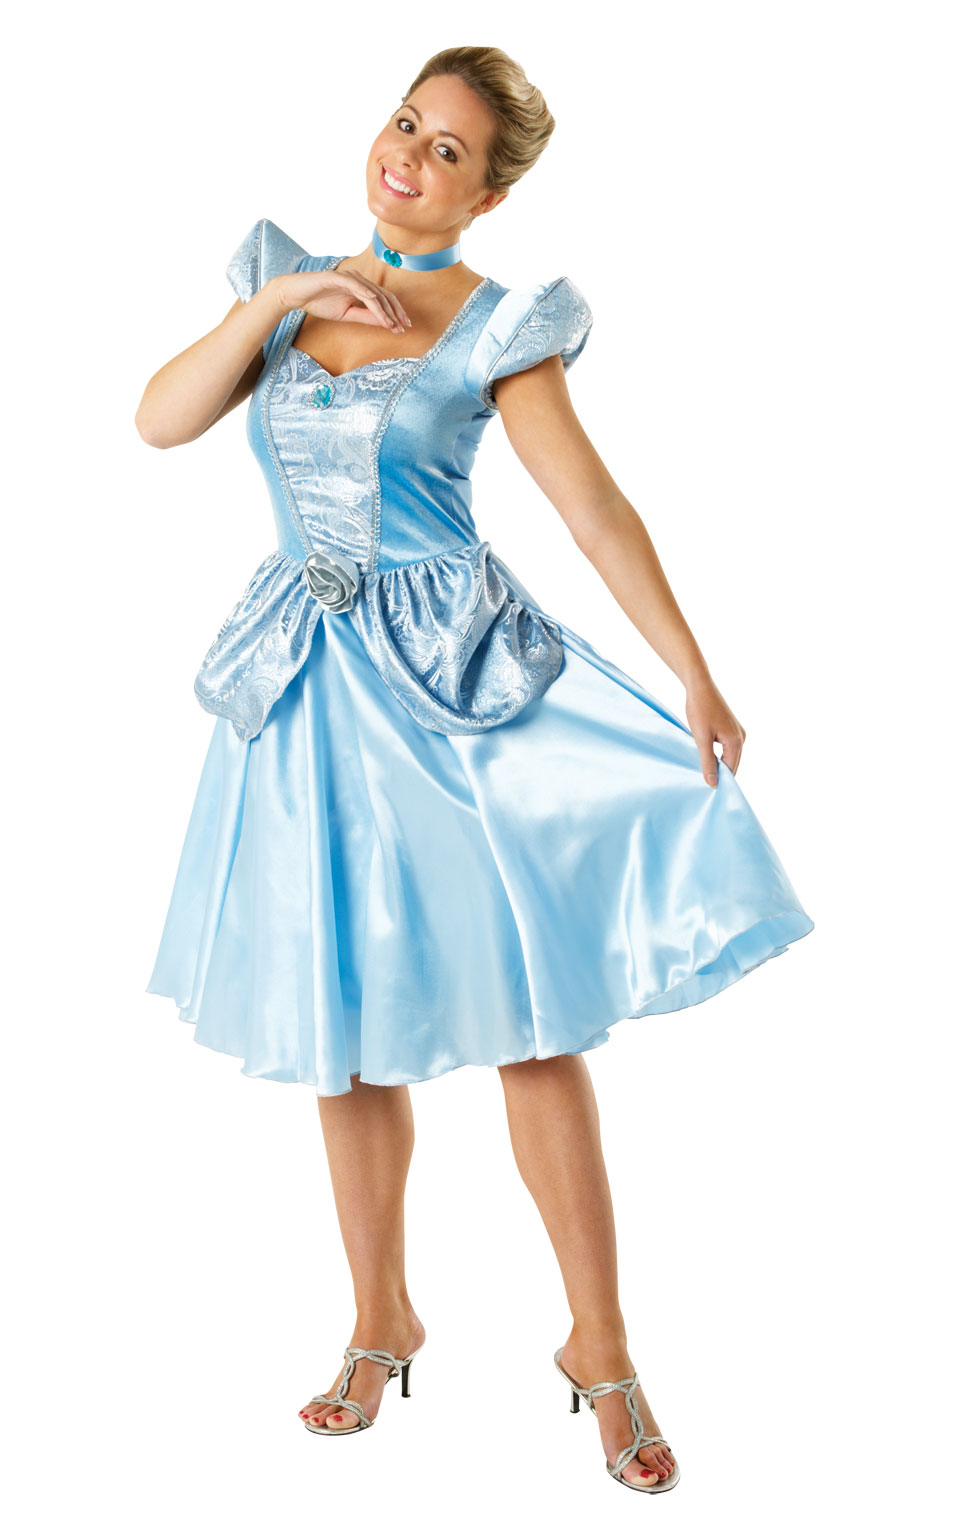 A Dreamy Family Halloween Look: Cinderella!